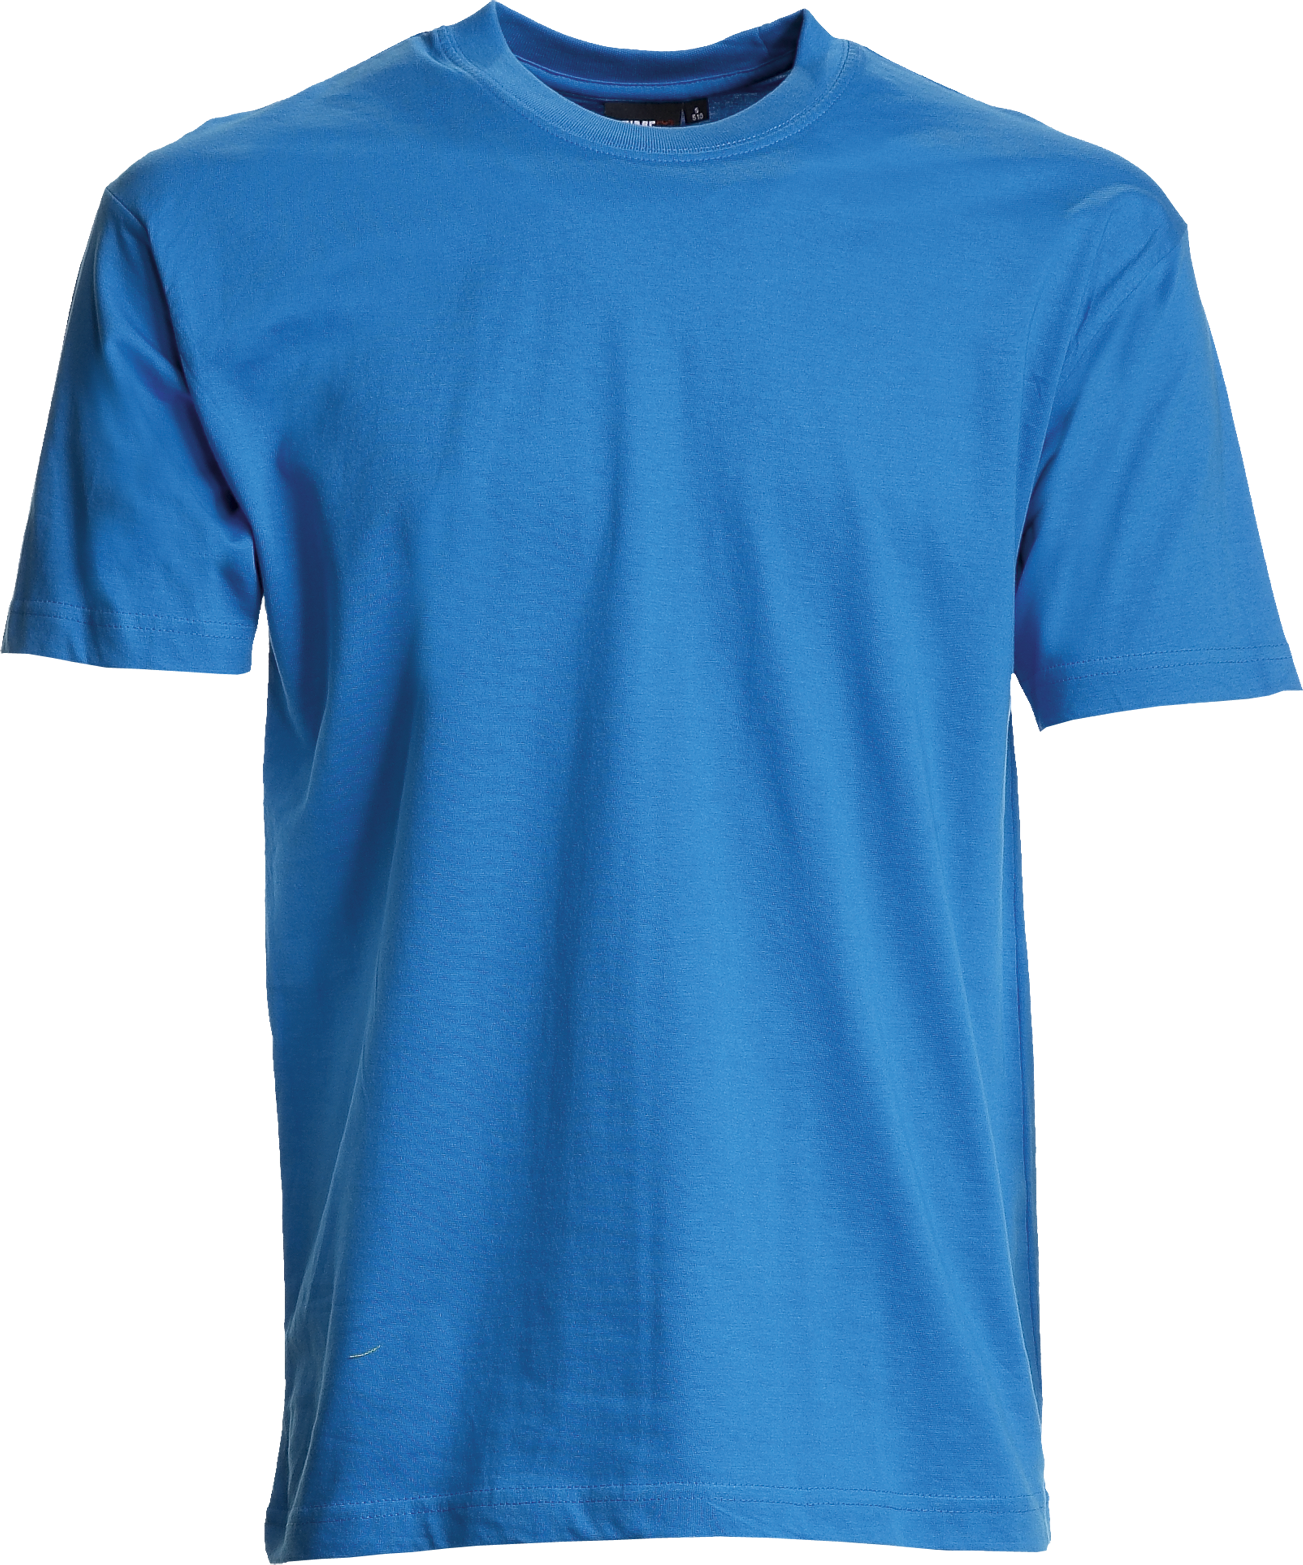 Turquoise Mens T-Shirt, Basic (8150101)